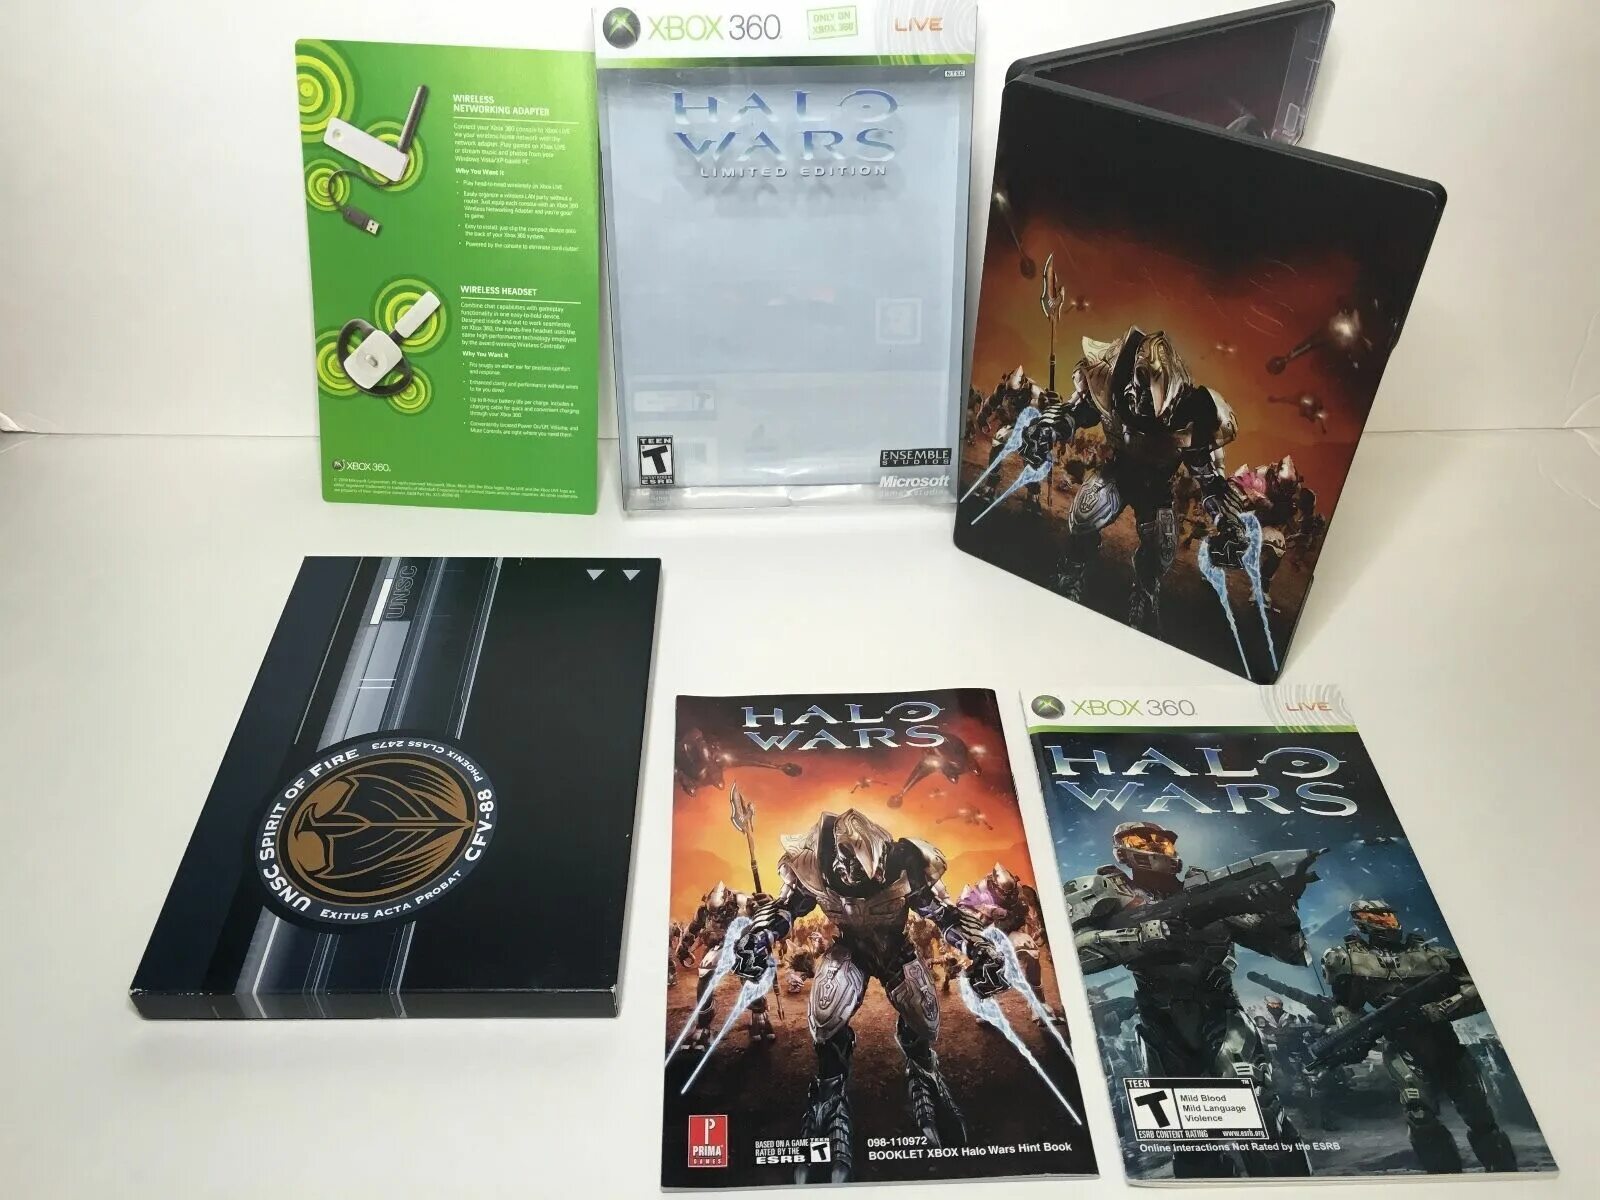 Wars limited. Xbox 360 Halo Wars Limited Edition Steelbook. Halo Wars Xbox 360 обложка. Xbox 360 2009. Halo Wars Limited.